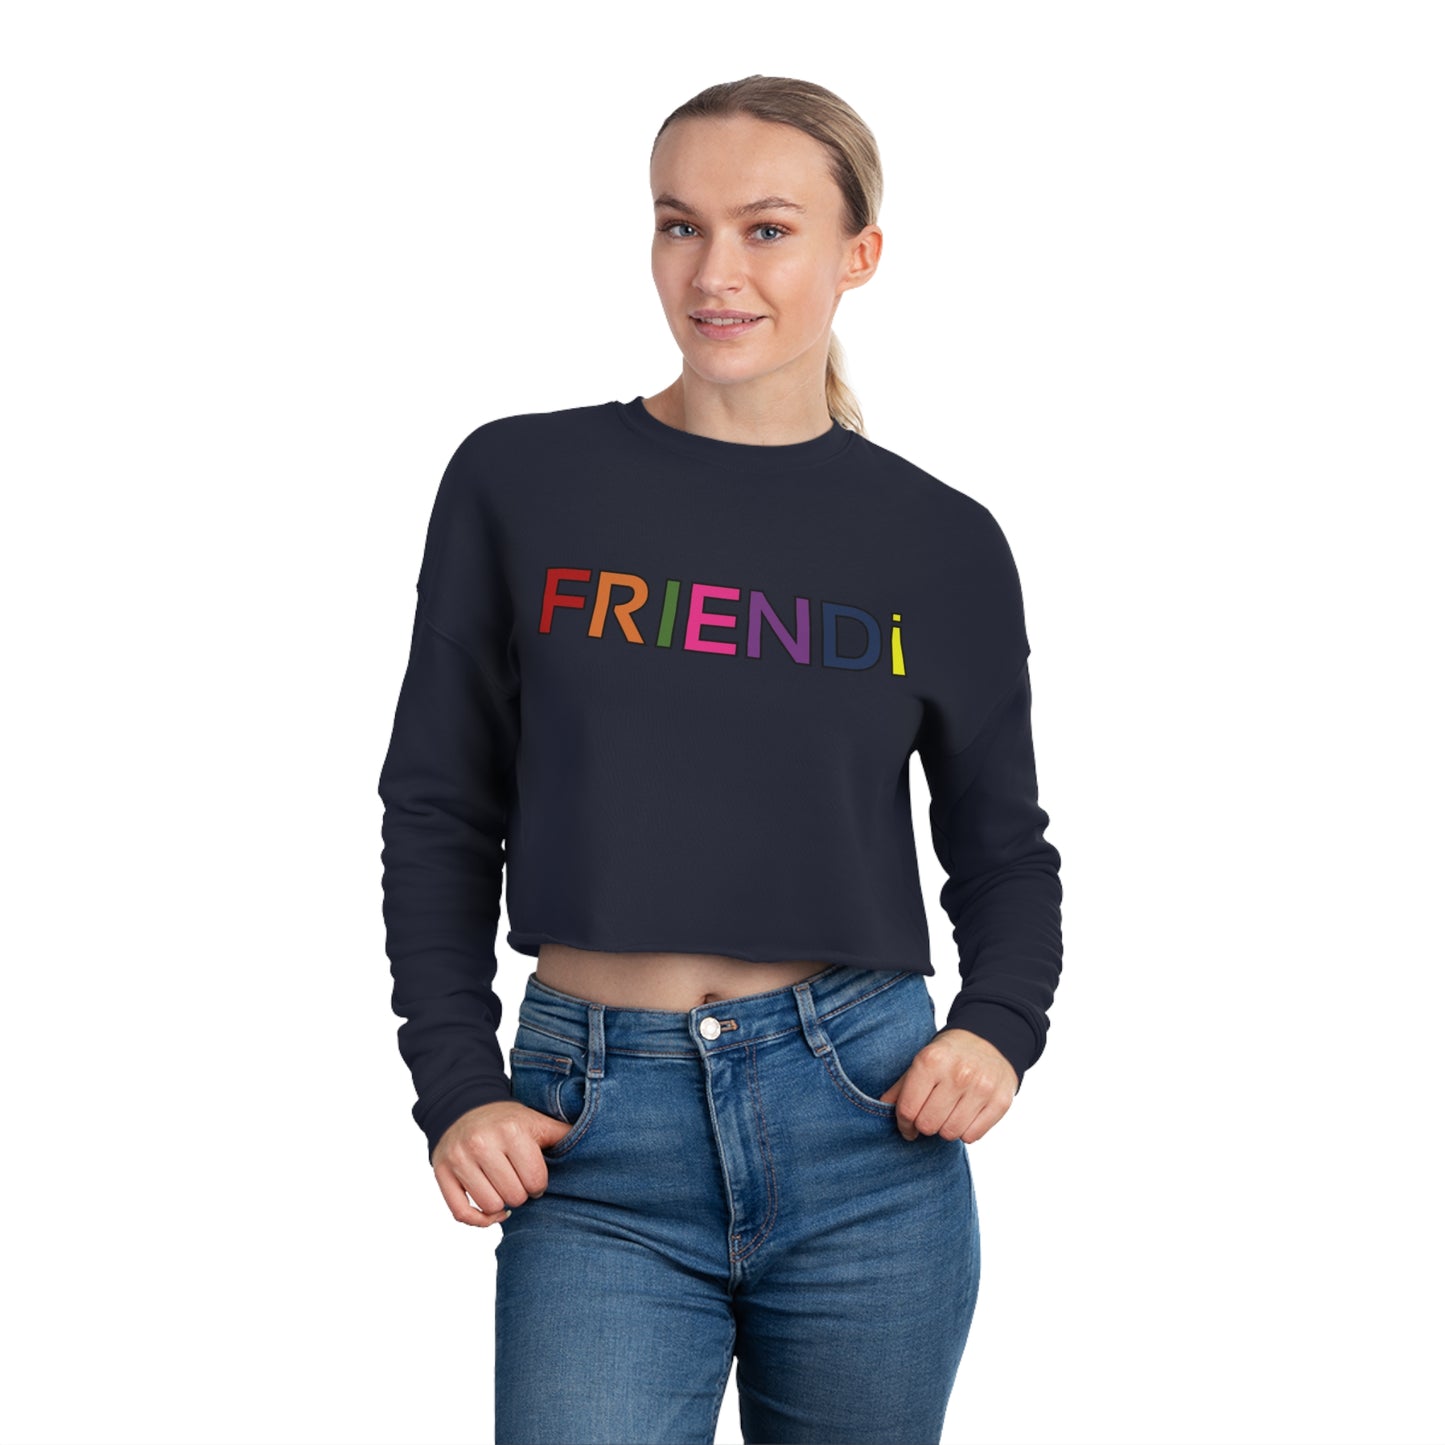 Friendi Cropped Sweatshirt